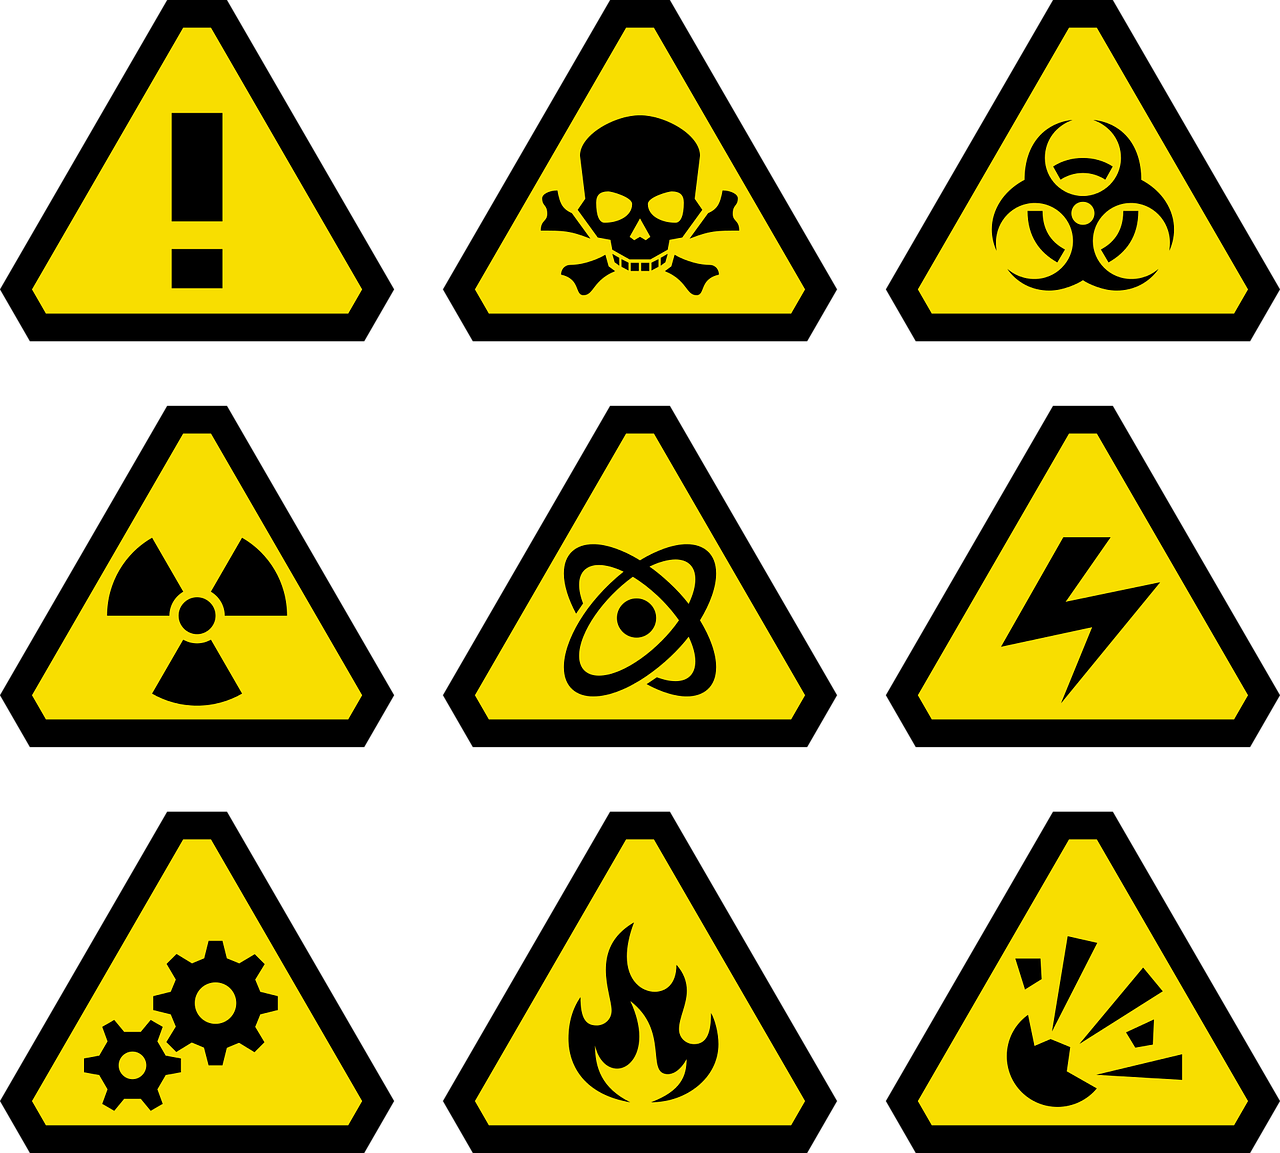 Disaster symbols